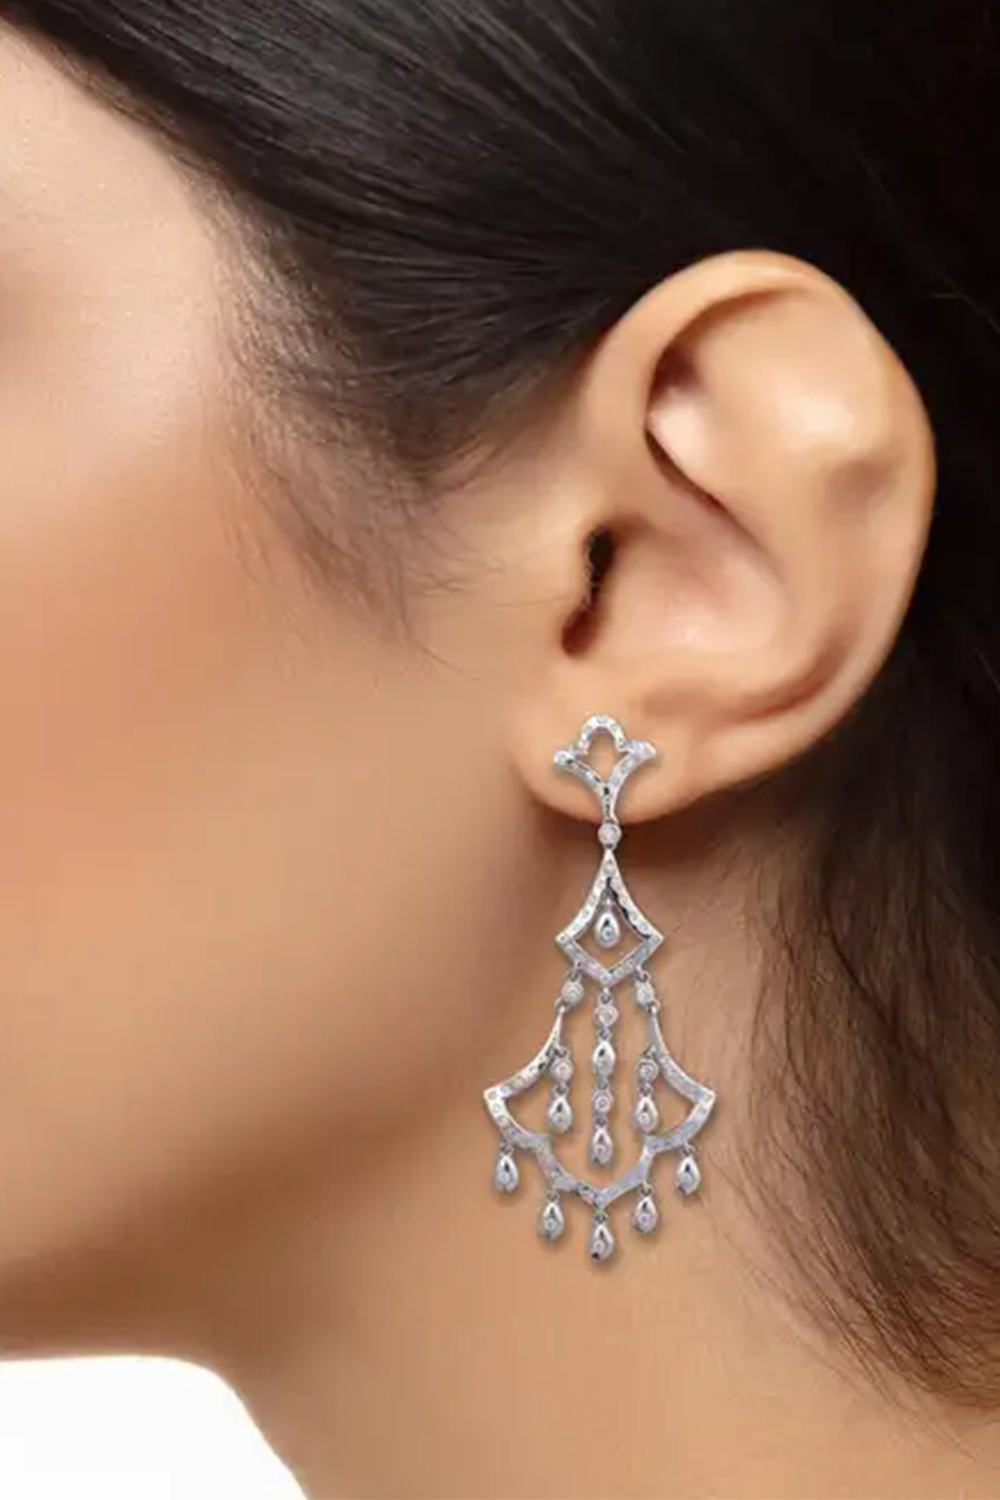 18k gold Diamond Earring with 0.91 carats of diamond